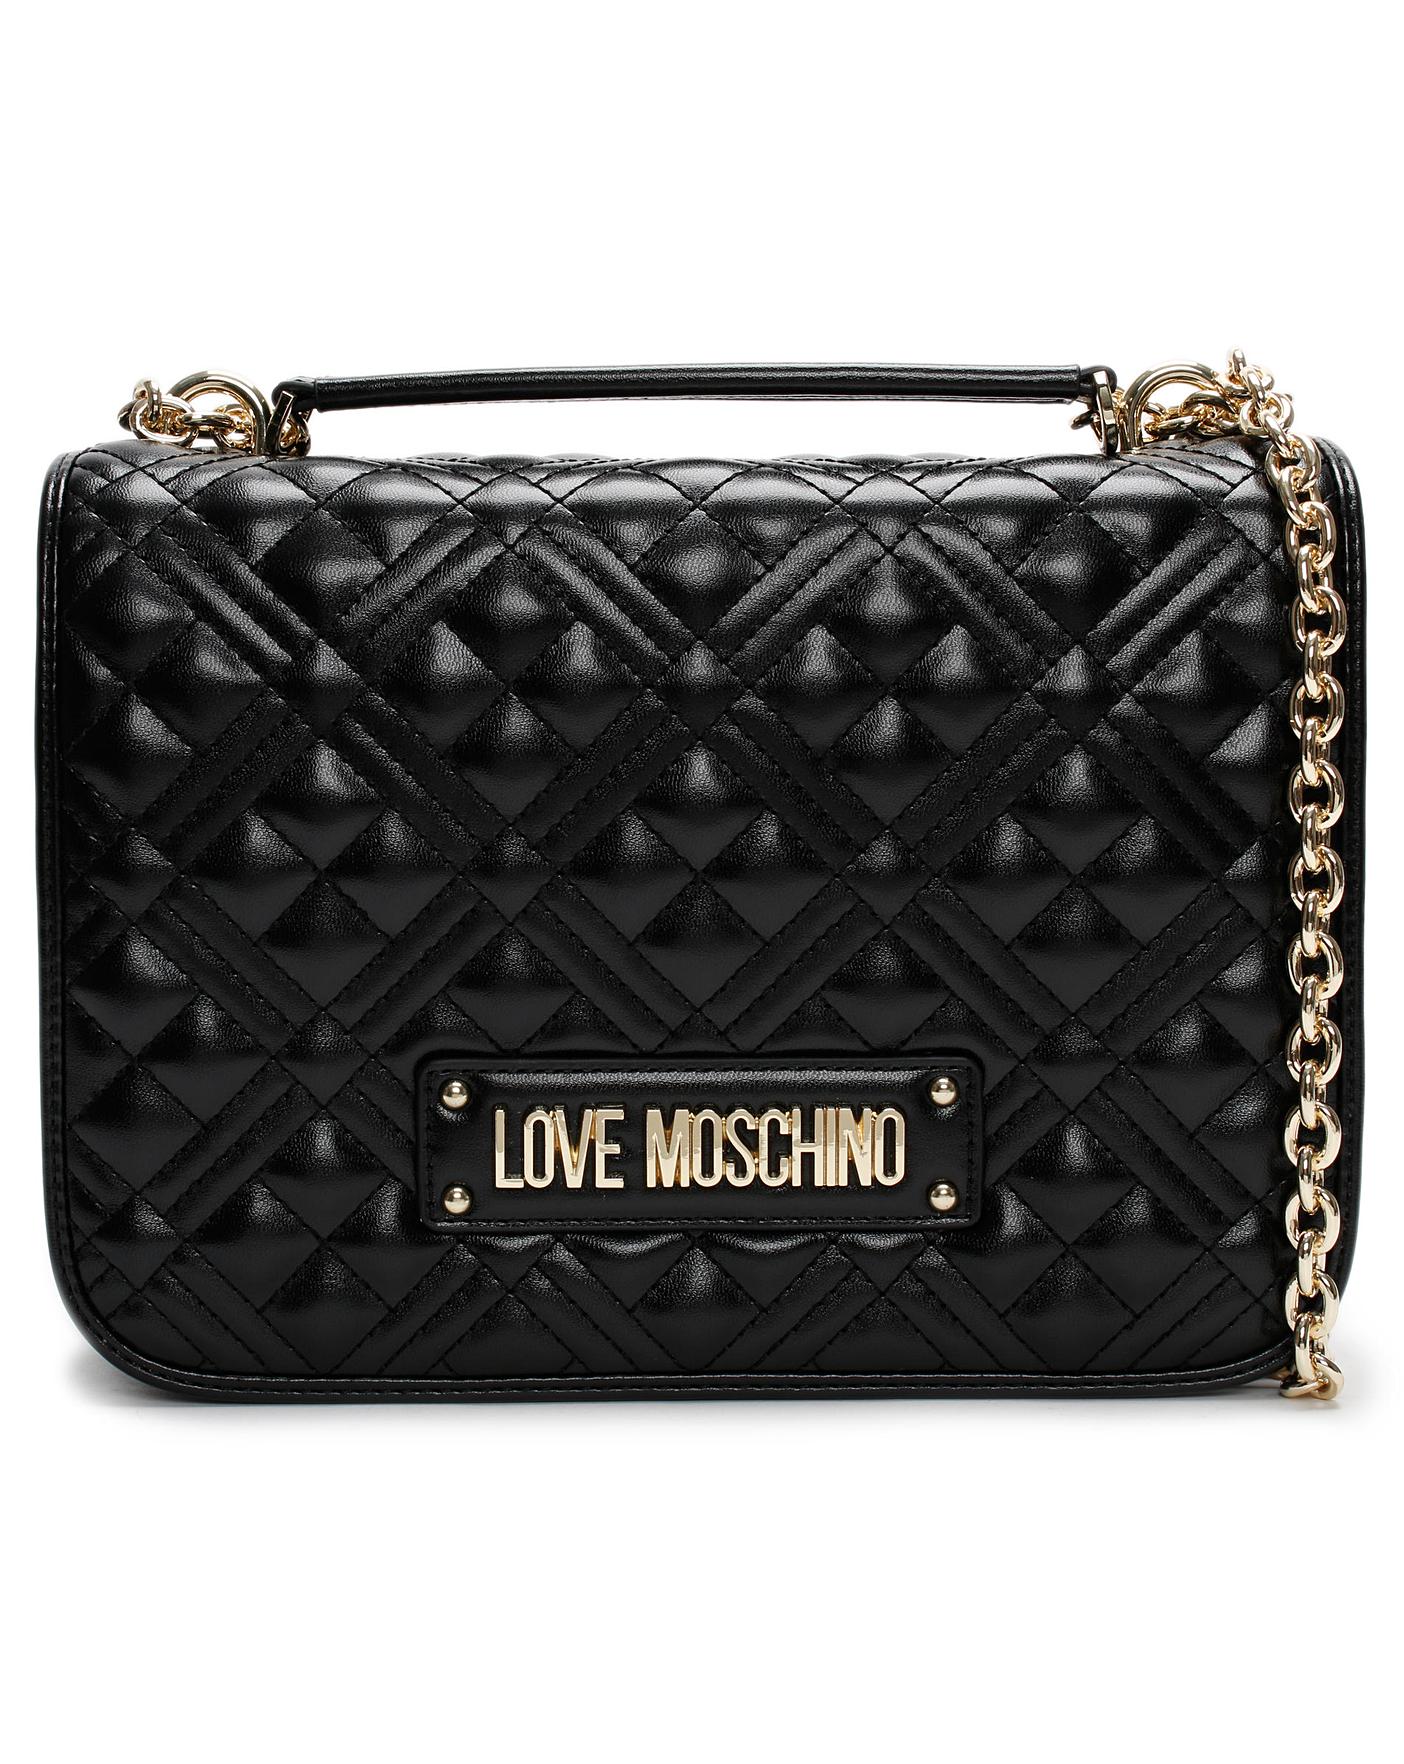 Best Leather Handbags by Love Moschino Handbags | Cherry UK Clothing